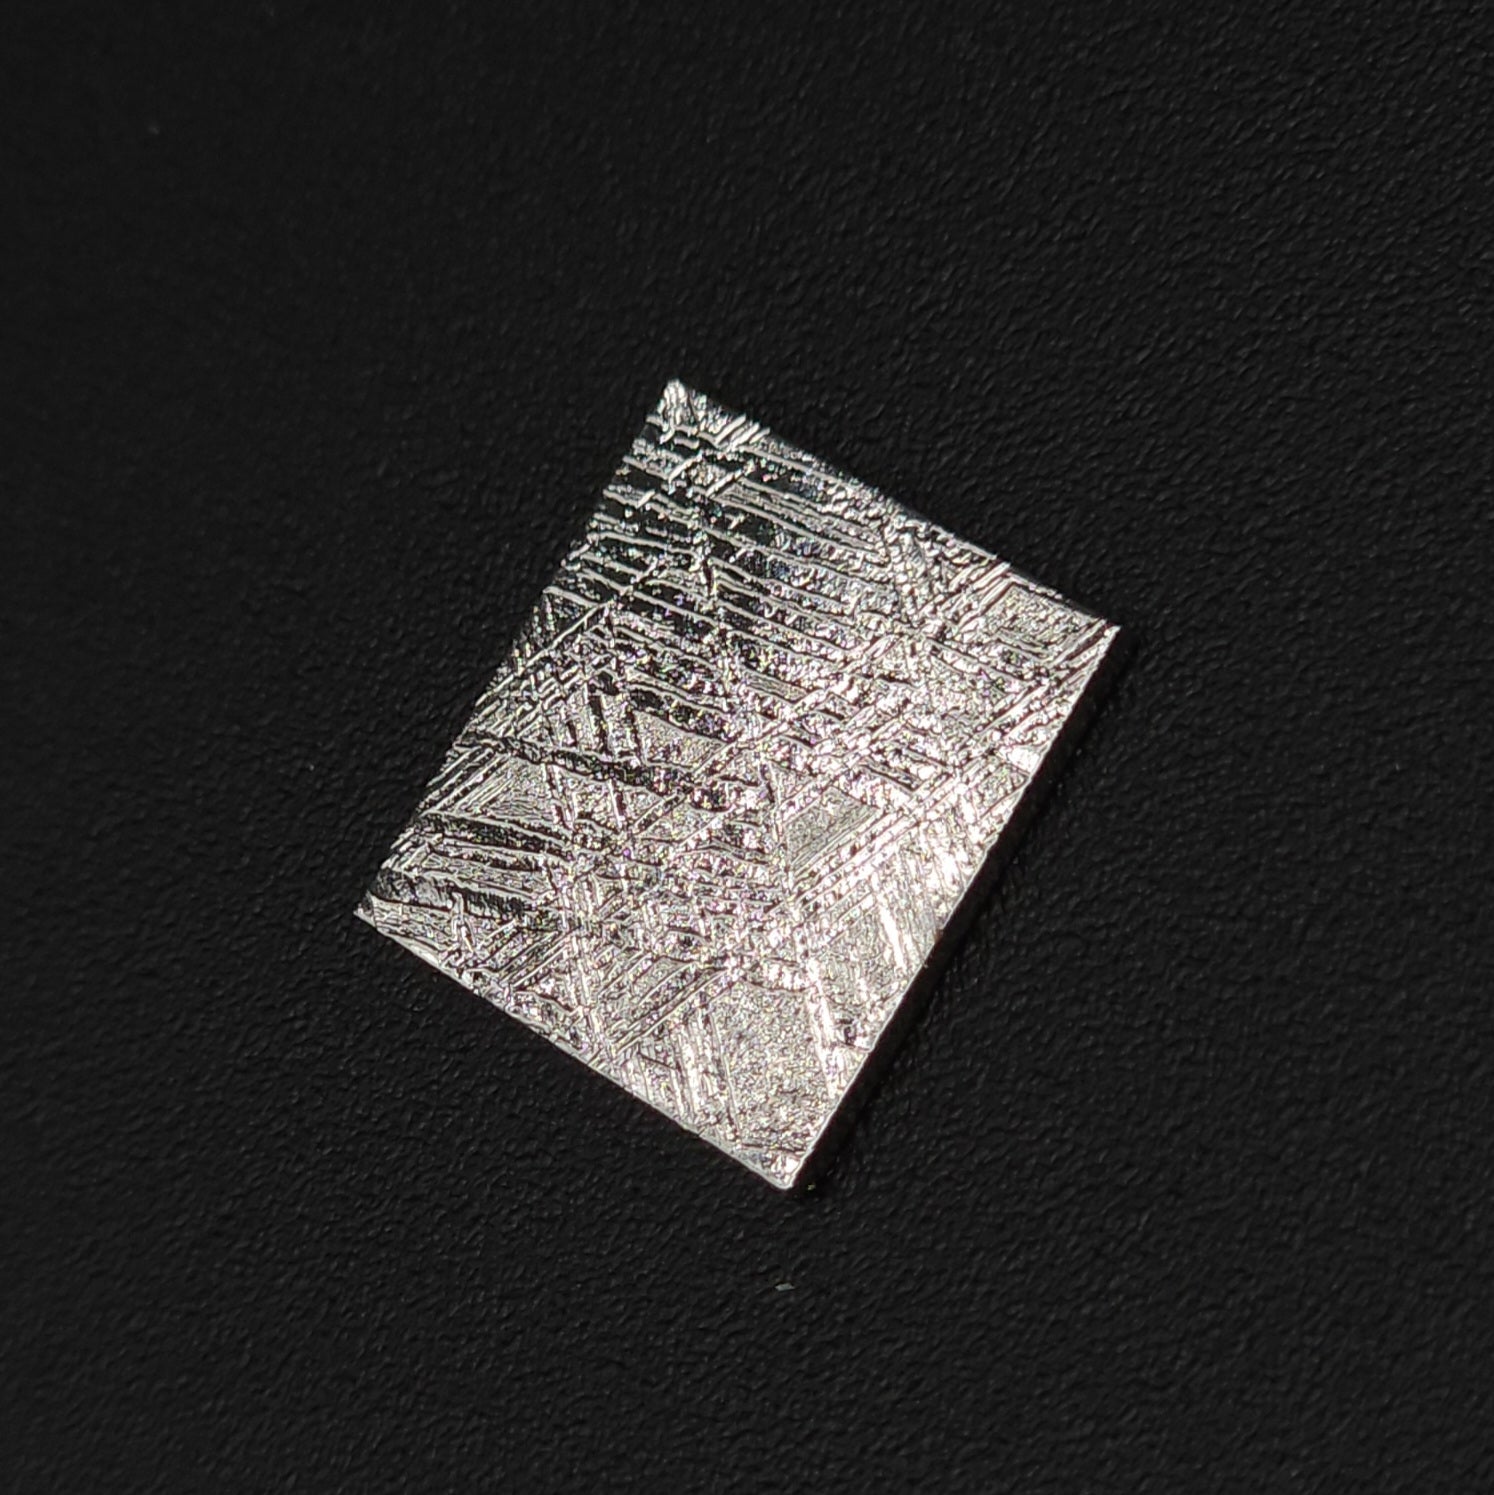 Munionalusta Meteorite Specimen Slice - Jewelry Grade 1.8g